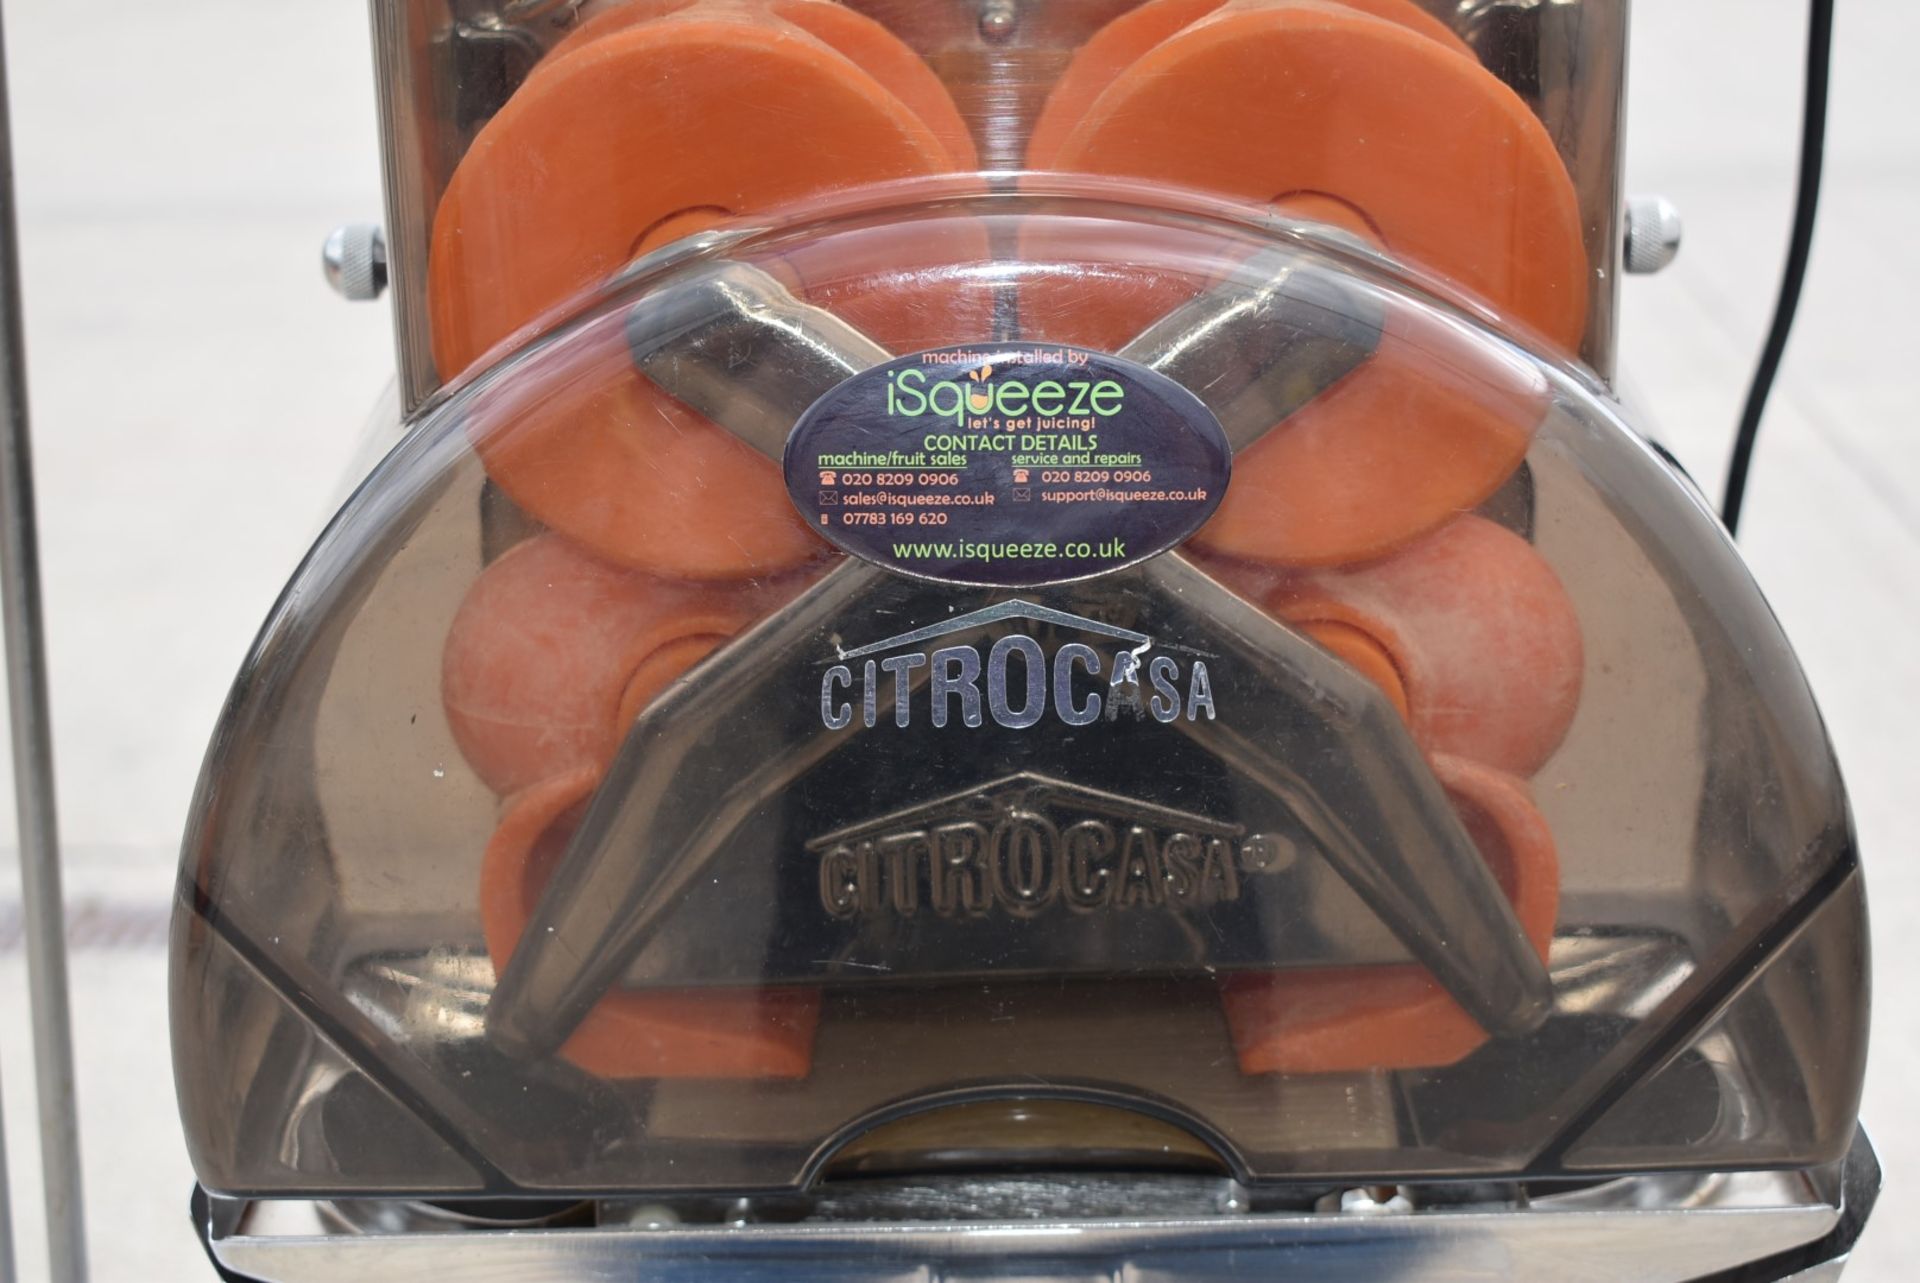 1 x Citrocasa Commercial Orange Juicer - Model Fantastic ATS - Auto Fruit Feeding Juicer RRP £7,900 - Image 7 of 25